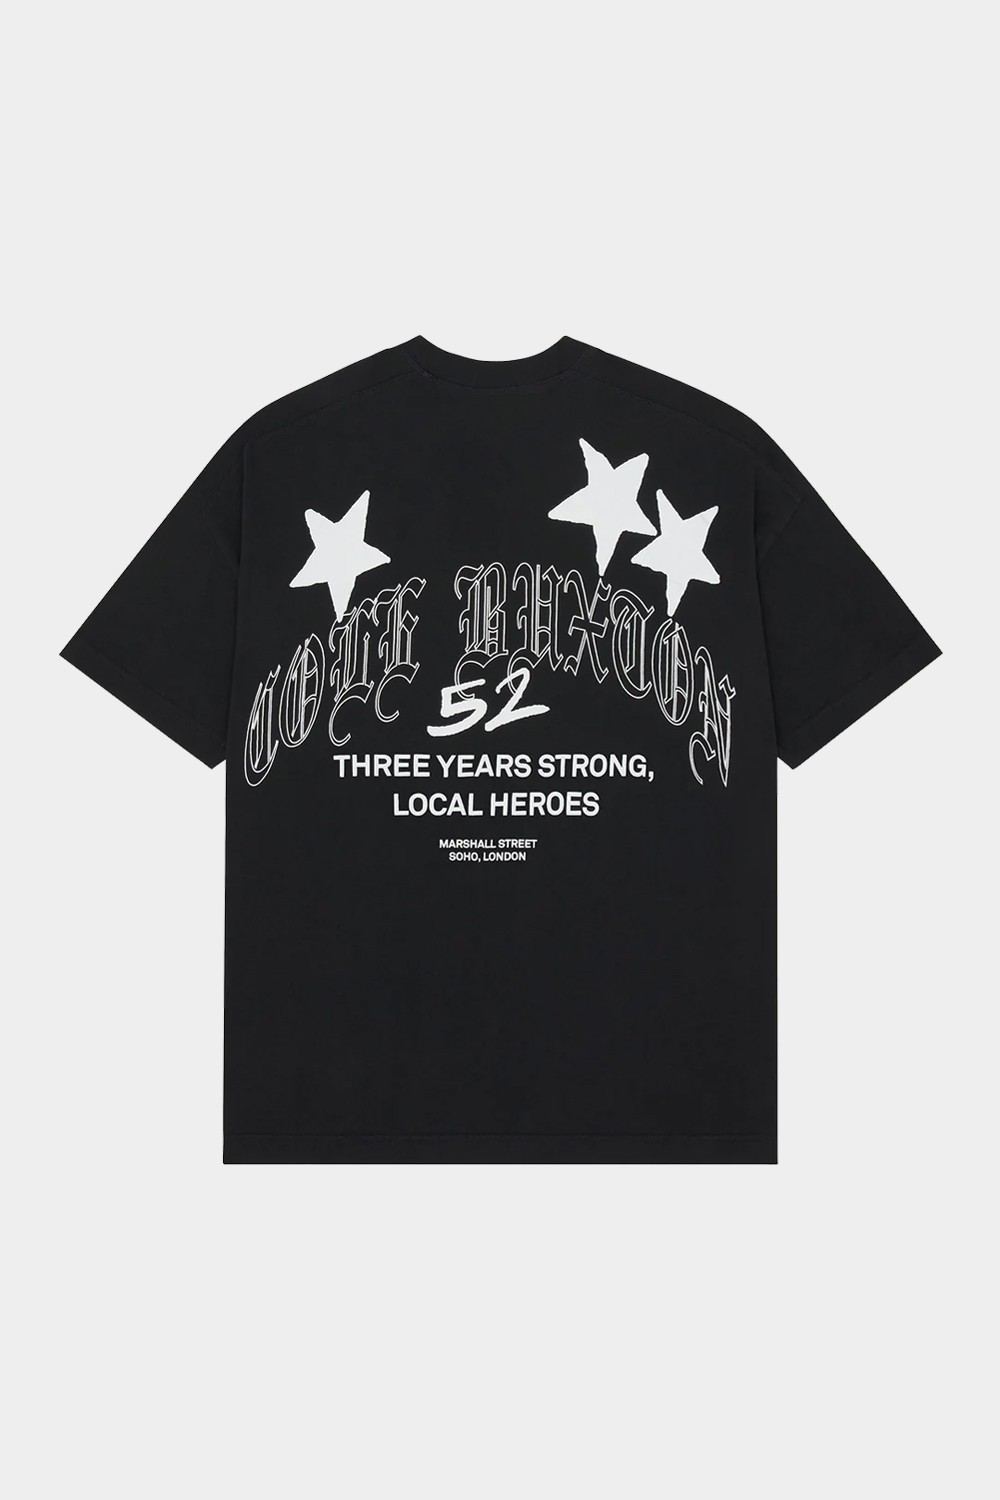 C.B. Oversized Anniversary T Shirt Black (CLBXT6)